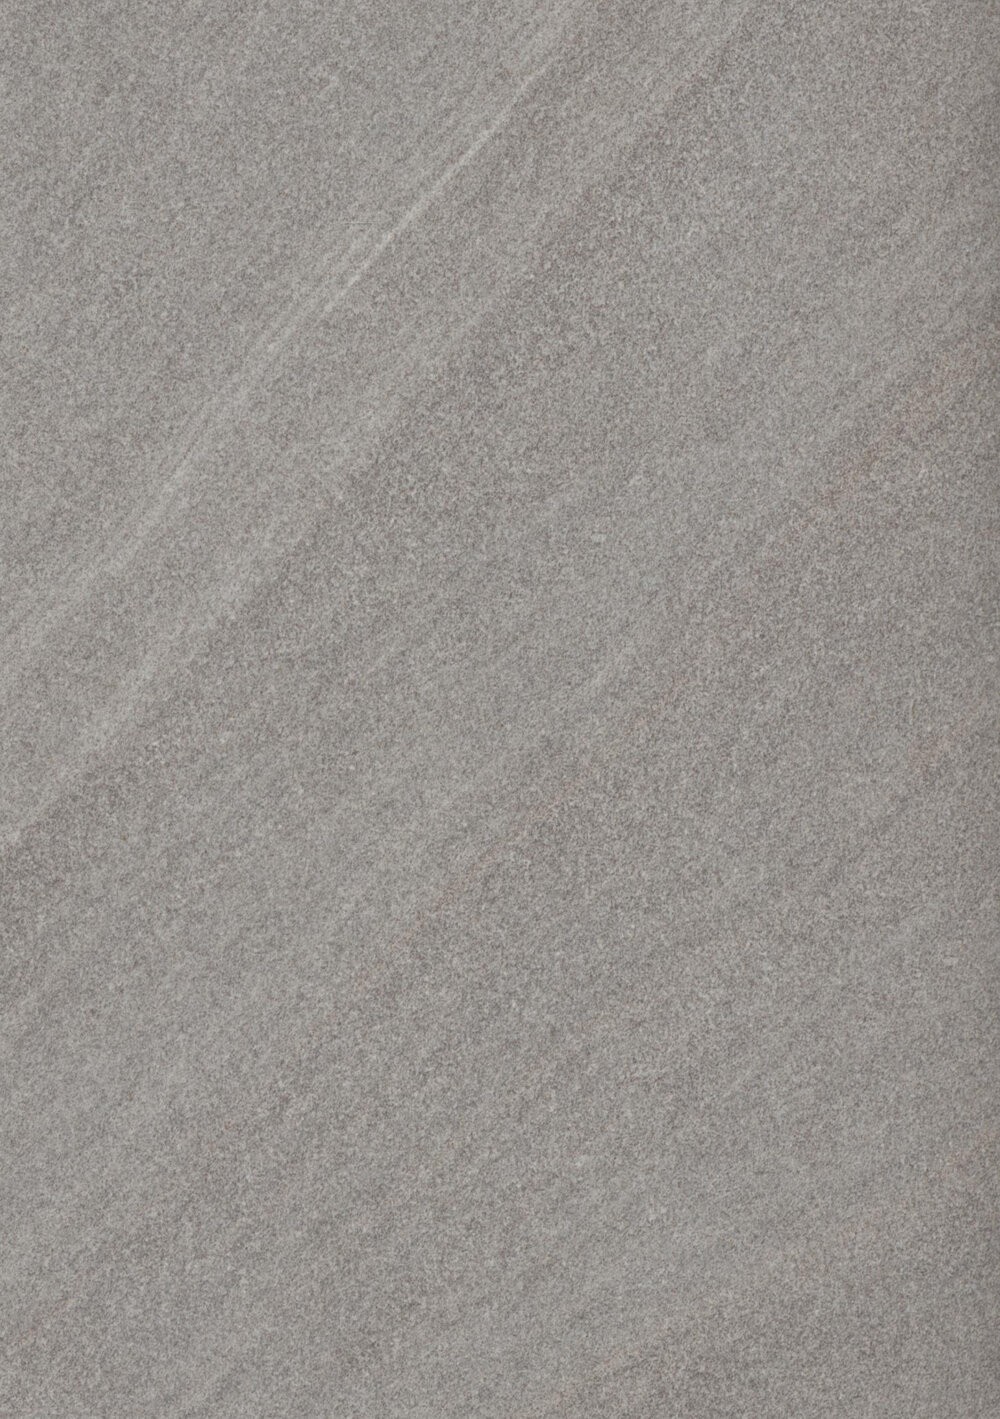 Mermaid MWP-MOON-SQ Timeless Trade Laminate Square Edge Shower Panel 2420 x 1210mm Moonlit Sand